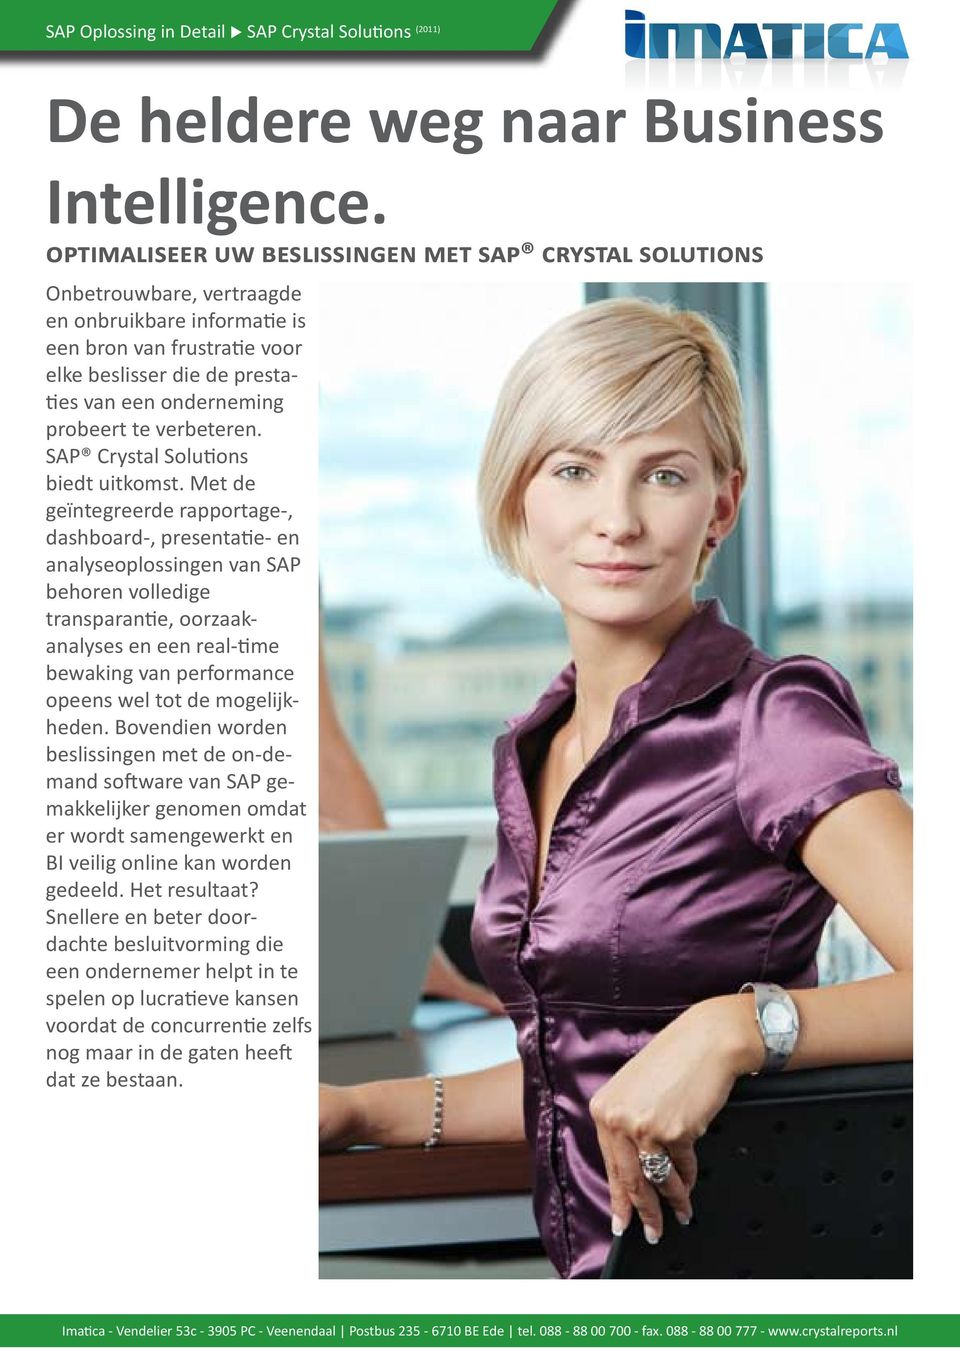 probeert te verbeteren. SAP Crystal Solutions biedt uitkomst.